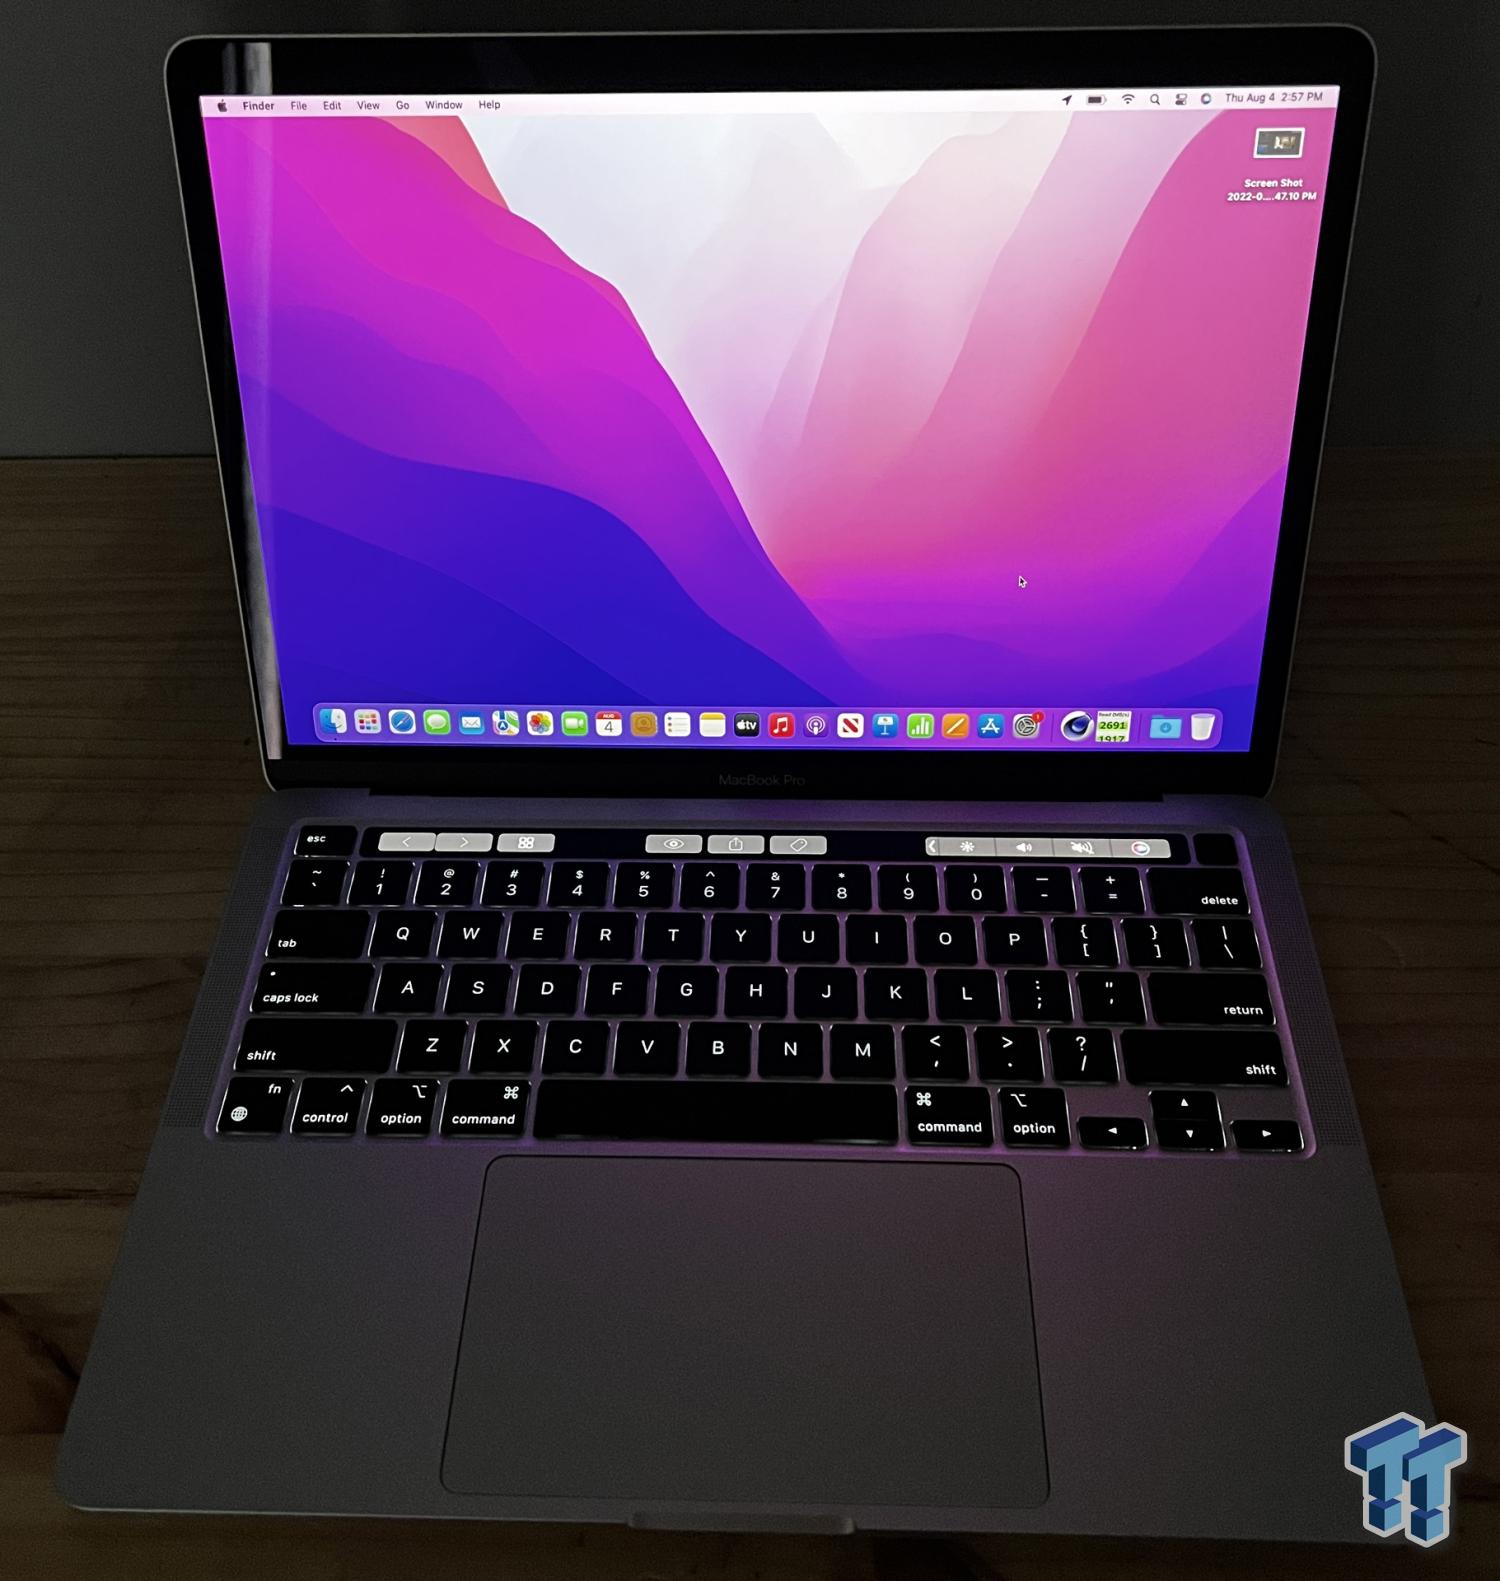 MacBook Pro M2 13-Inch Review: Familiar Design, New Apple M2 Chip